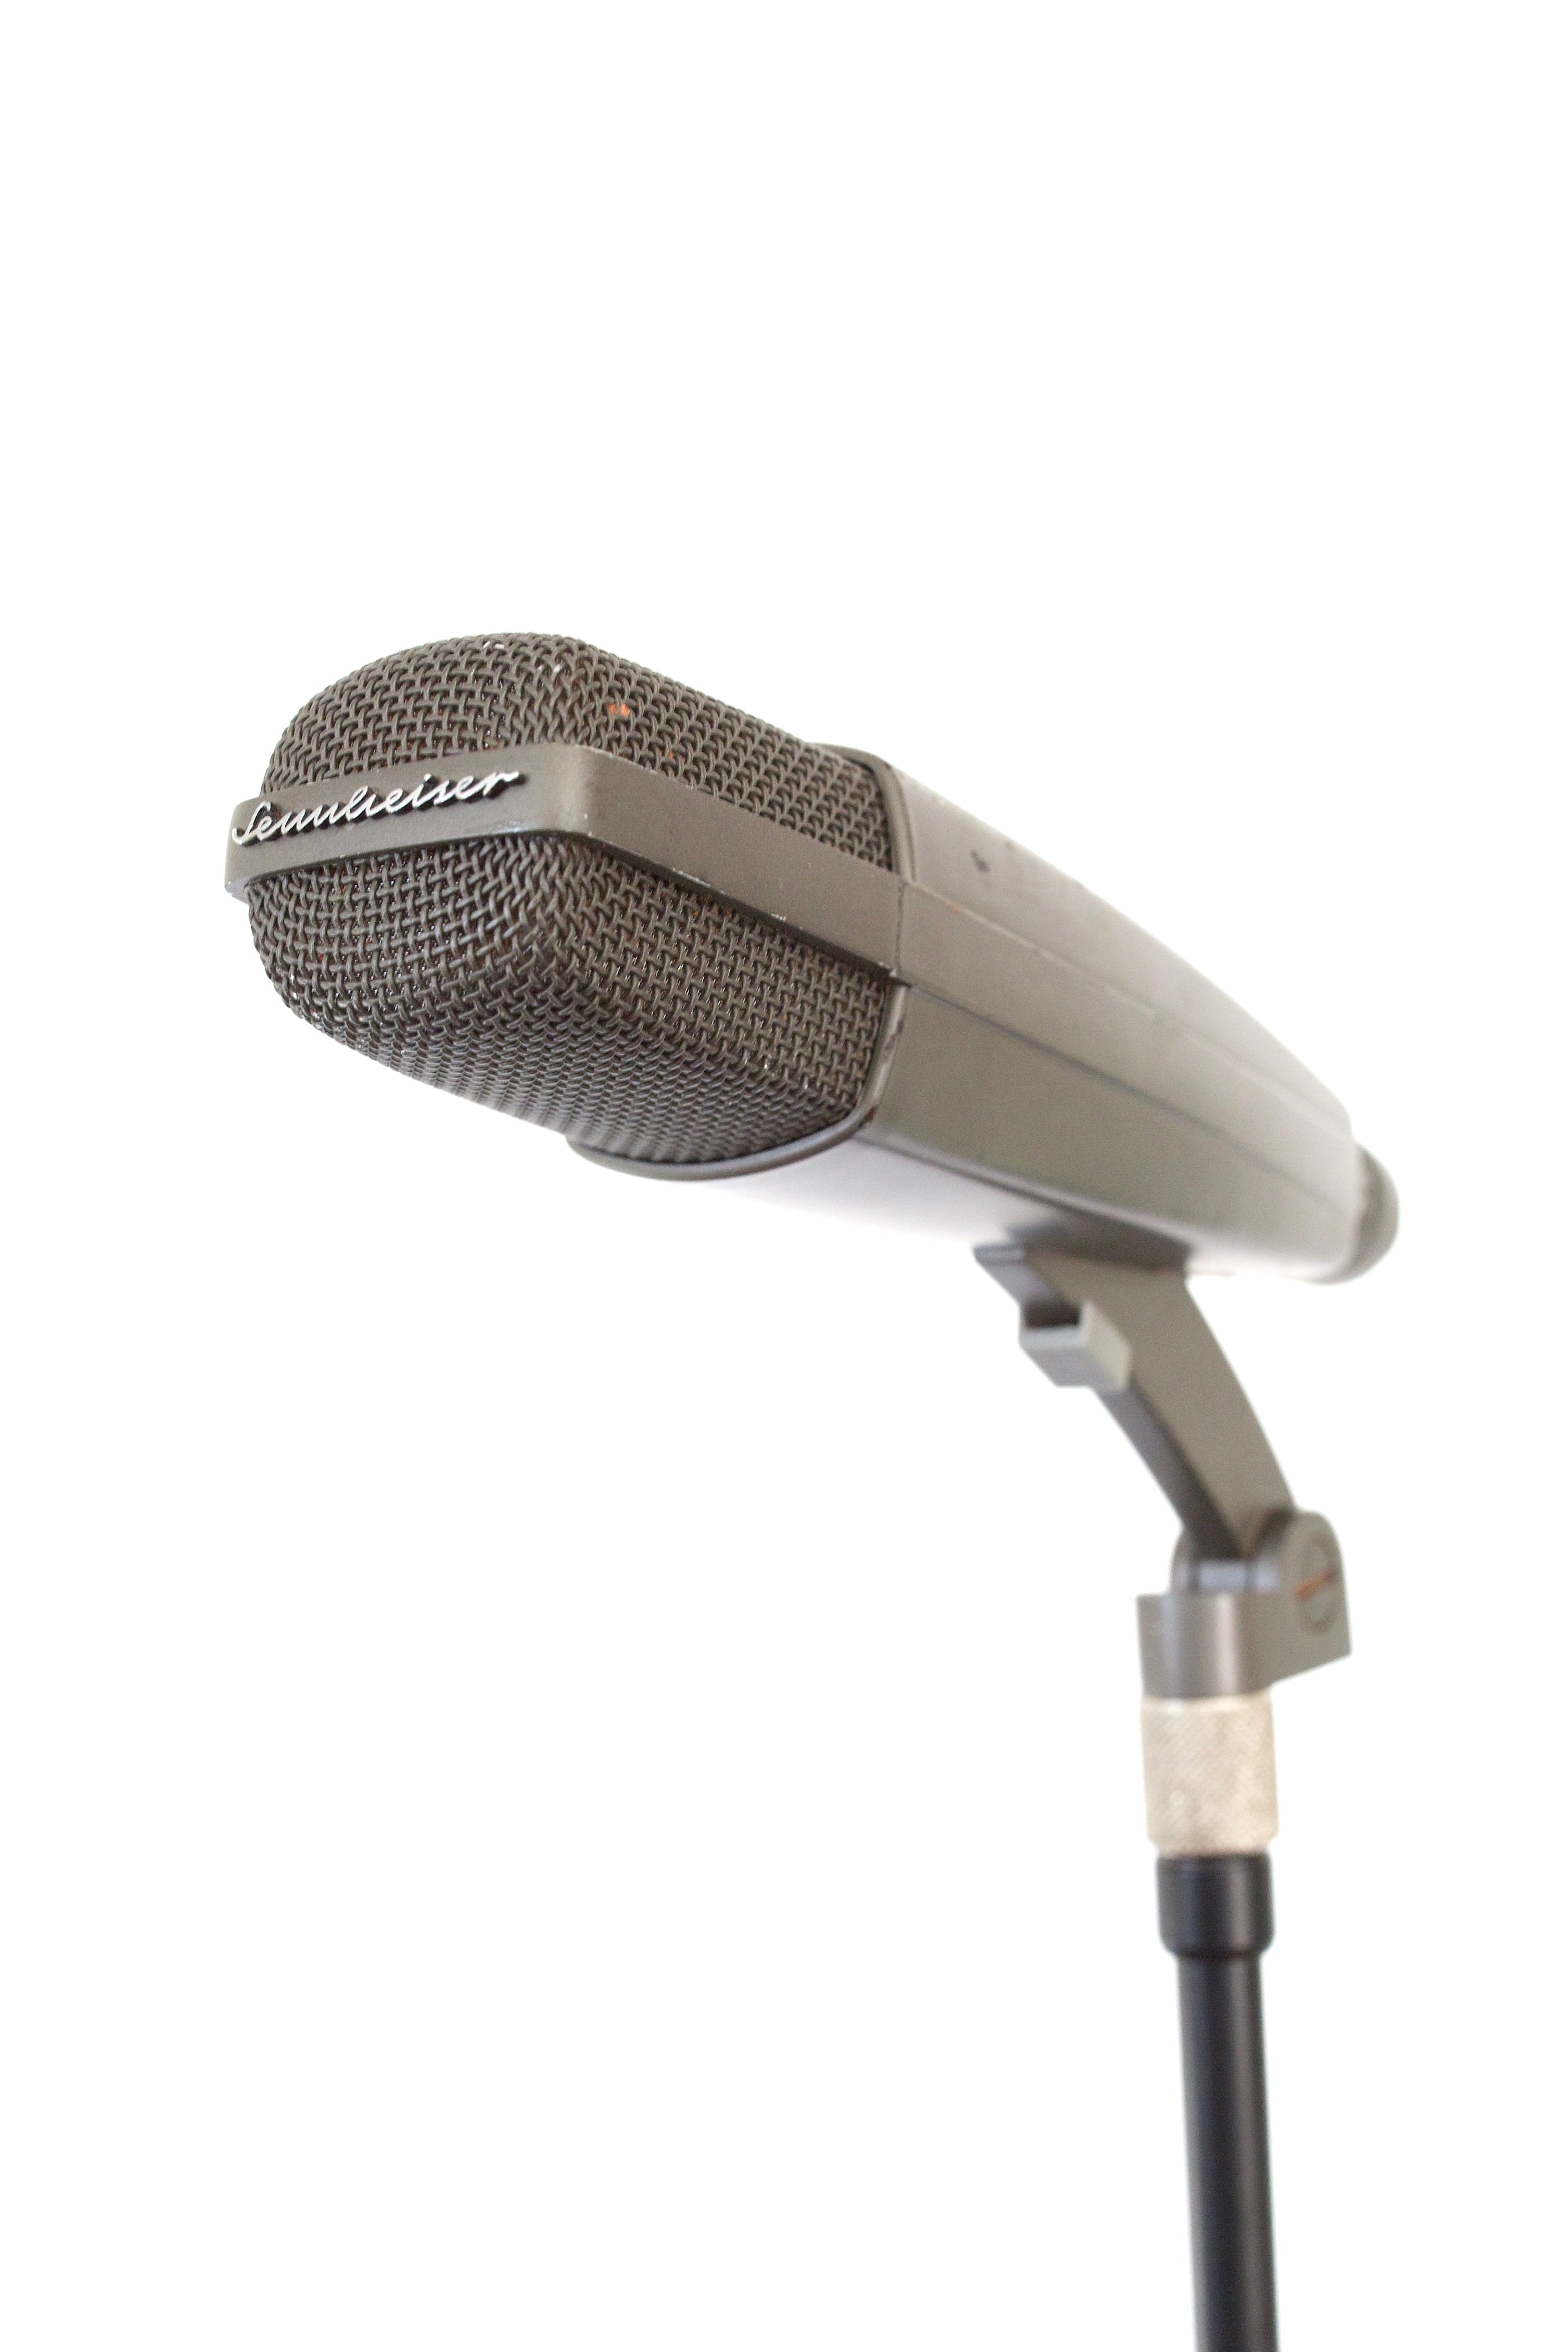 Sennheiser MD421/9 Dynamic Microphone